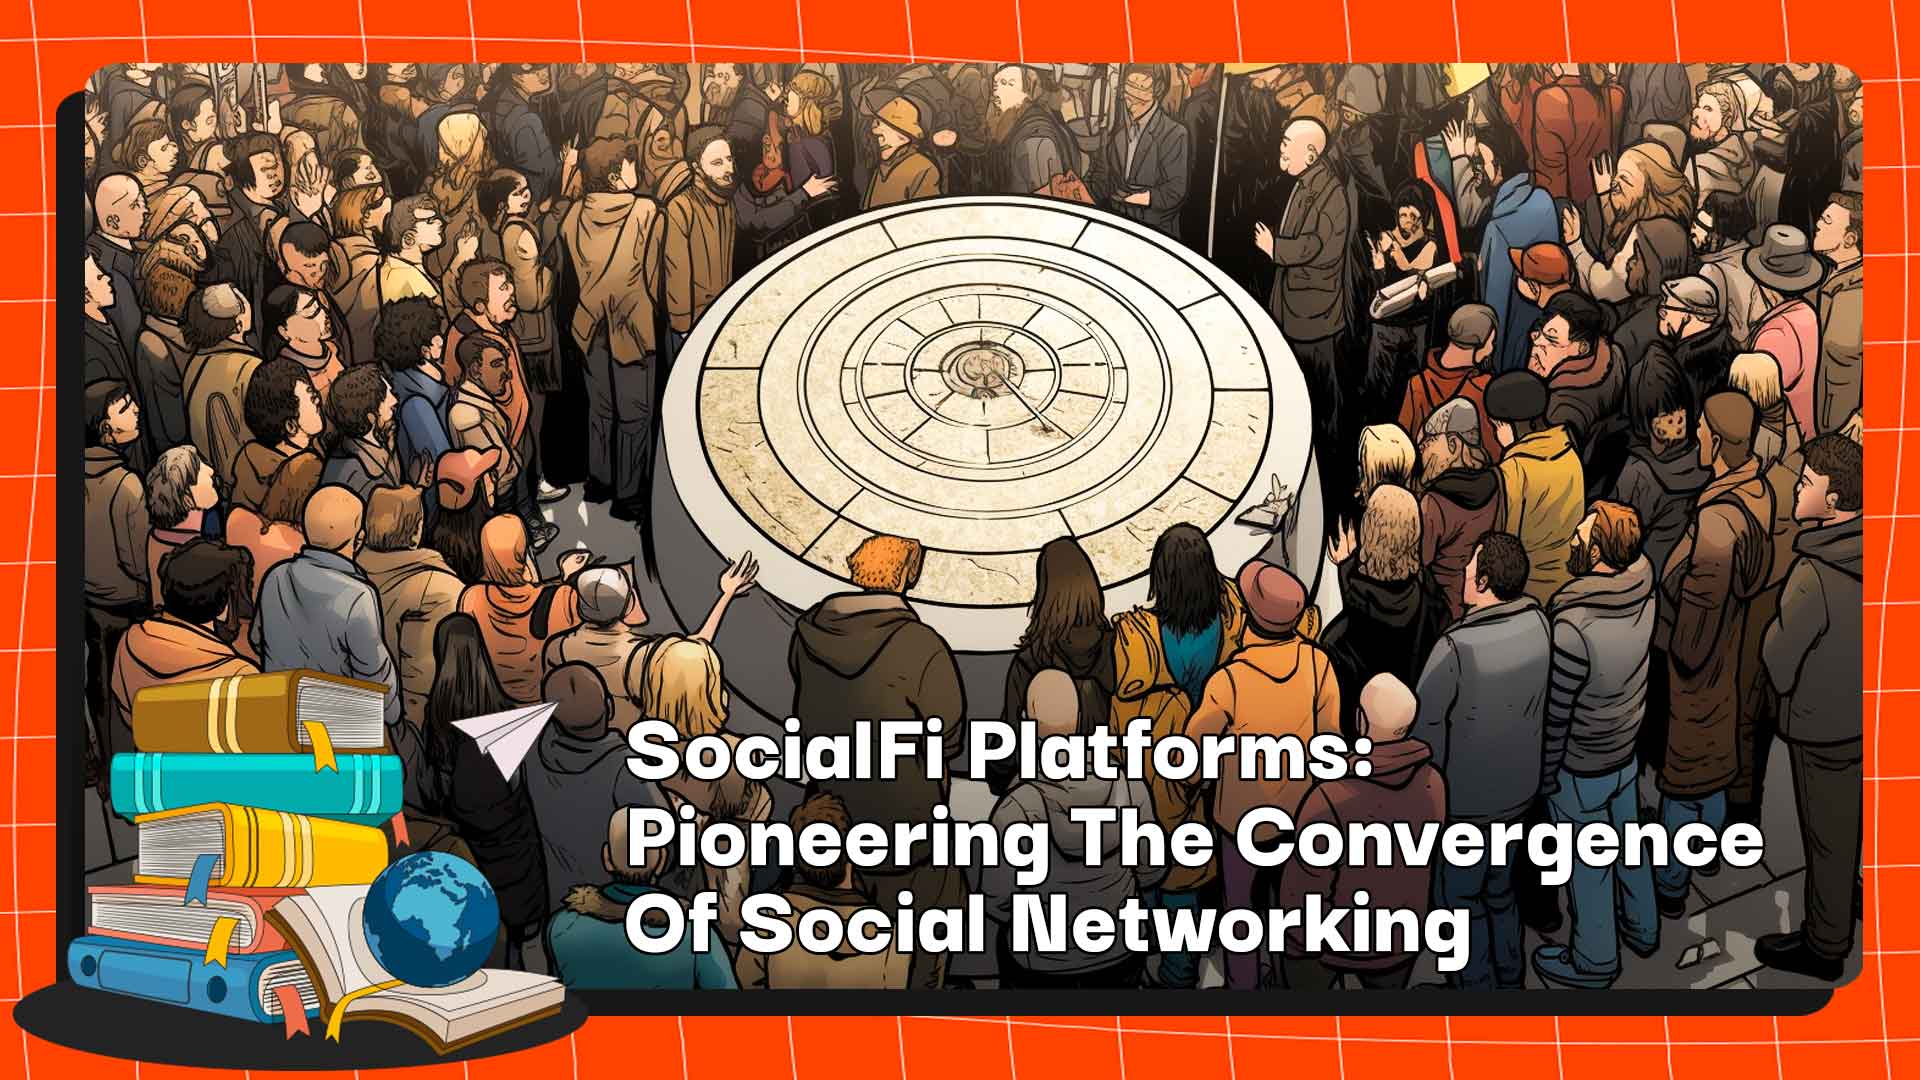 SocialFi Platforms: Pioneering The Convergence Of Social Networking